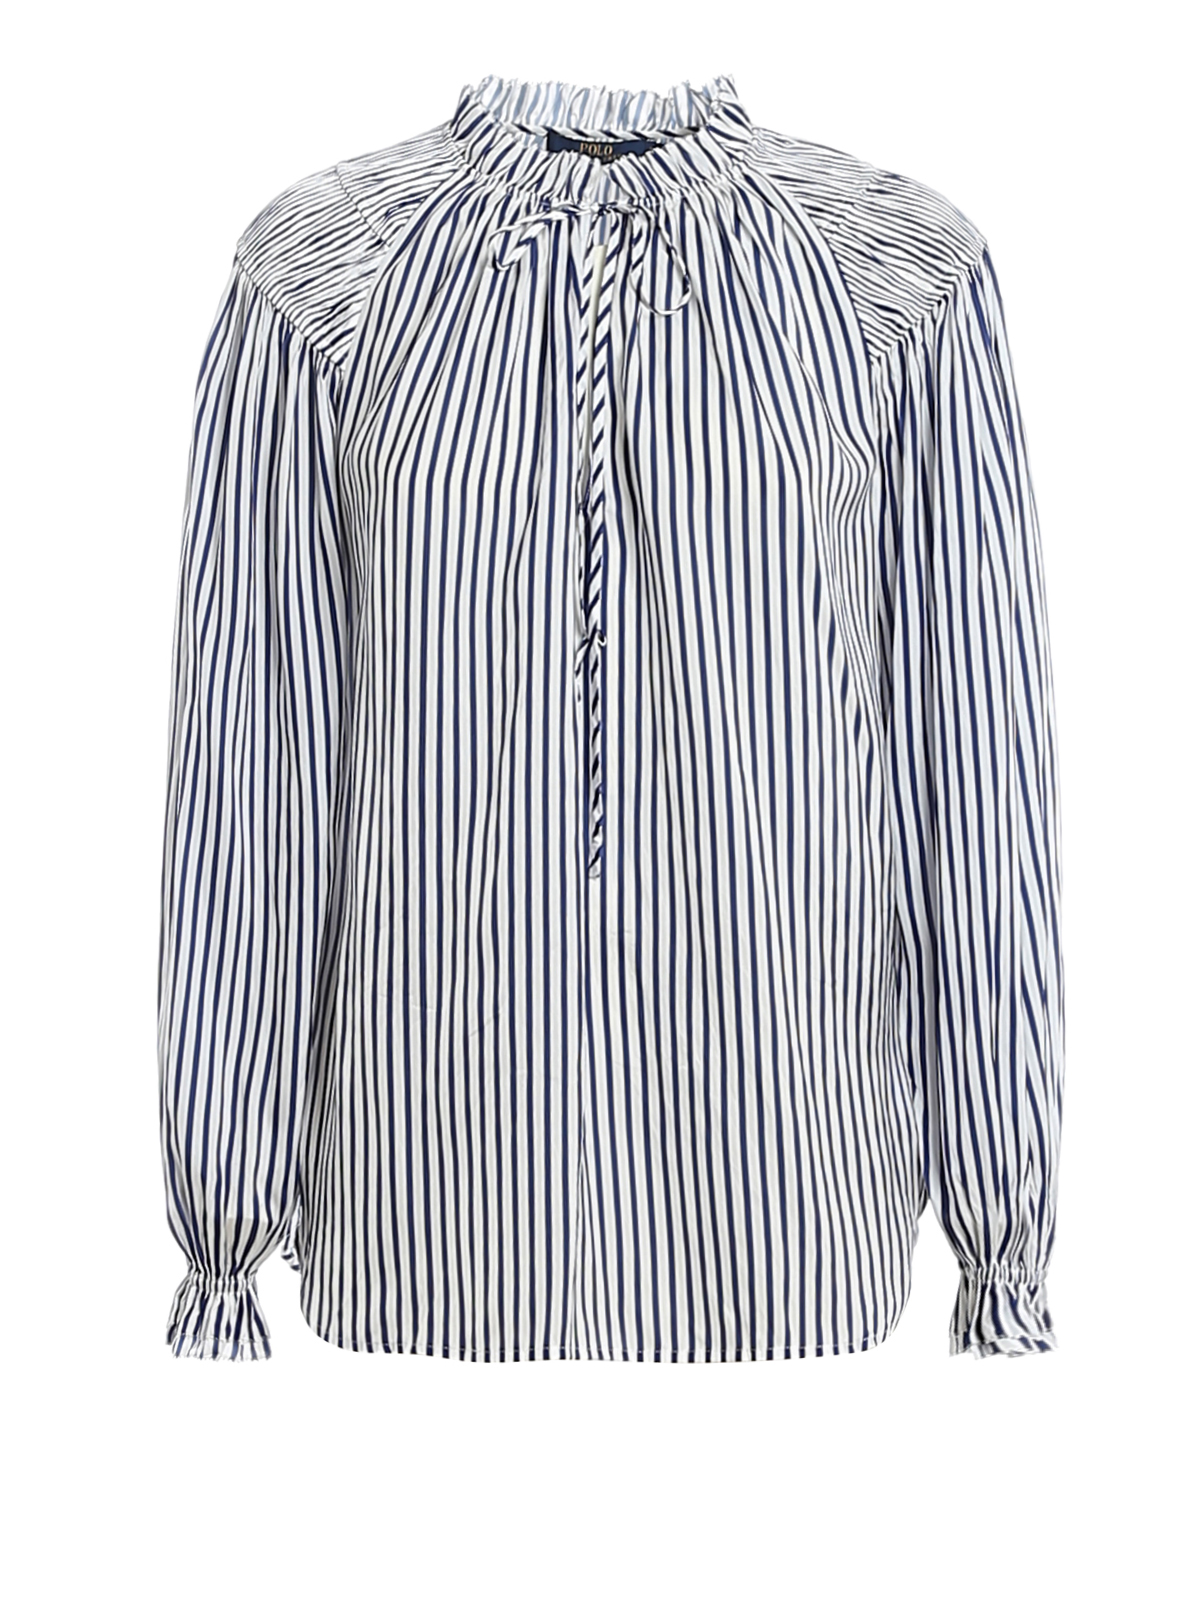 Blouses Polo Ralph Lauren - Striped cady blouse - 211780744001 